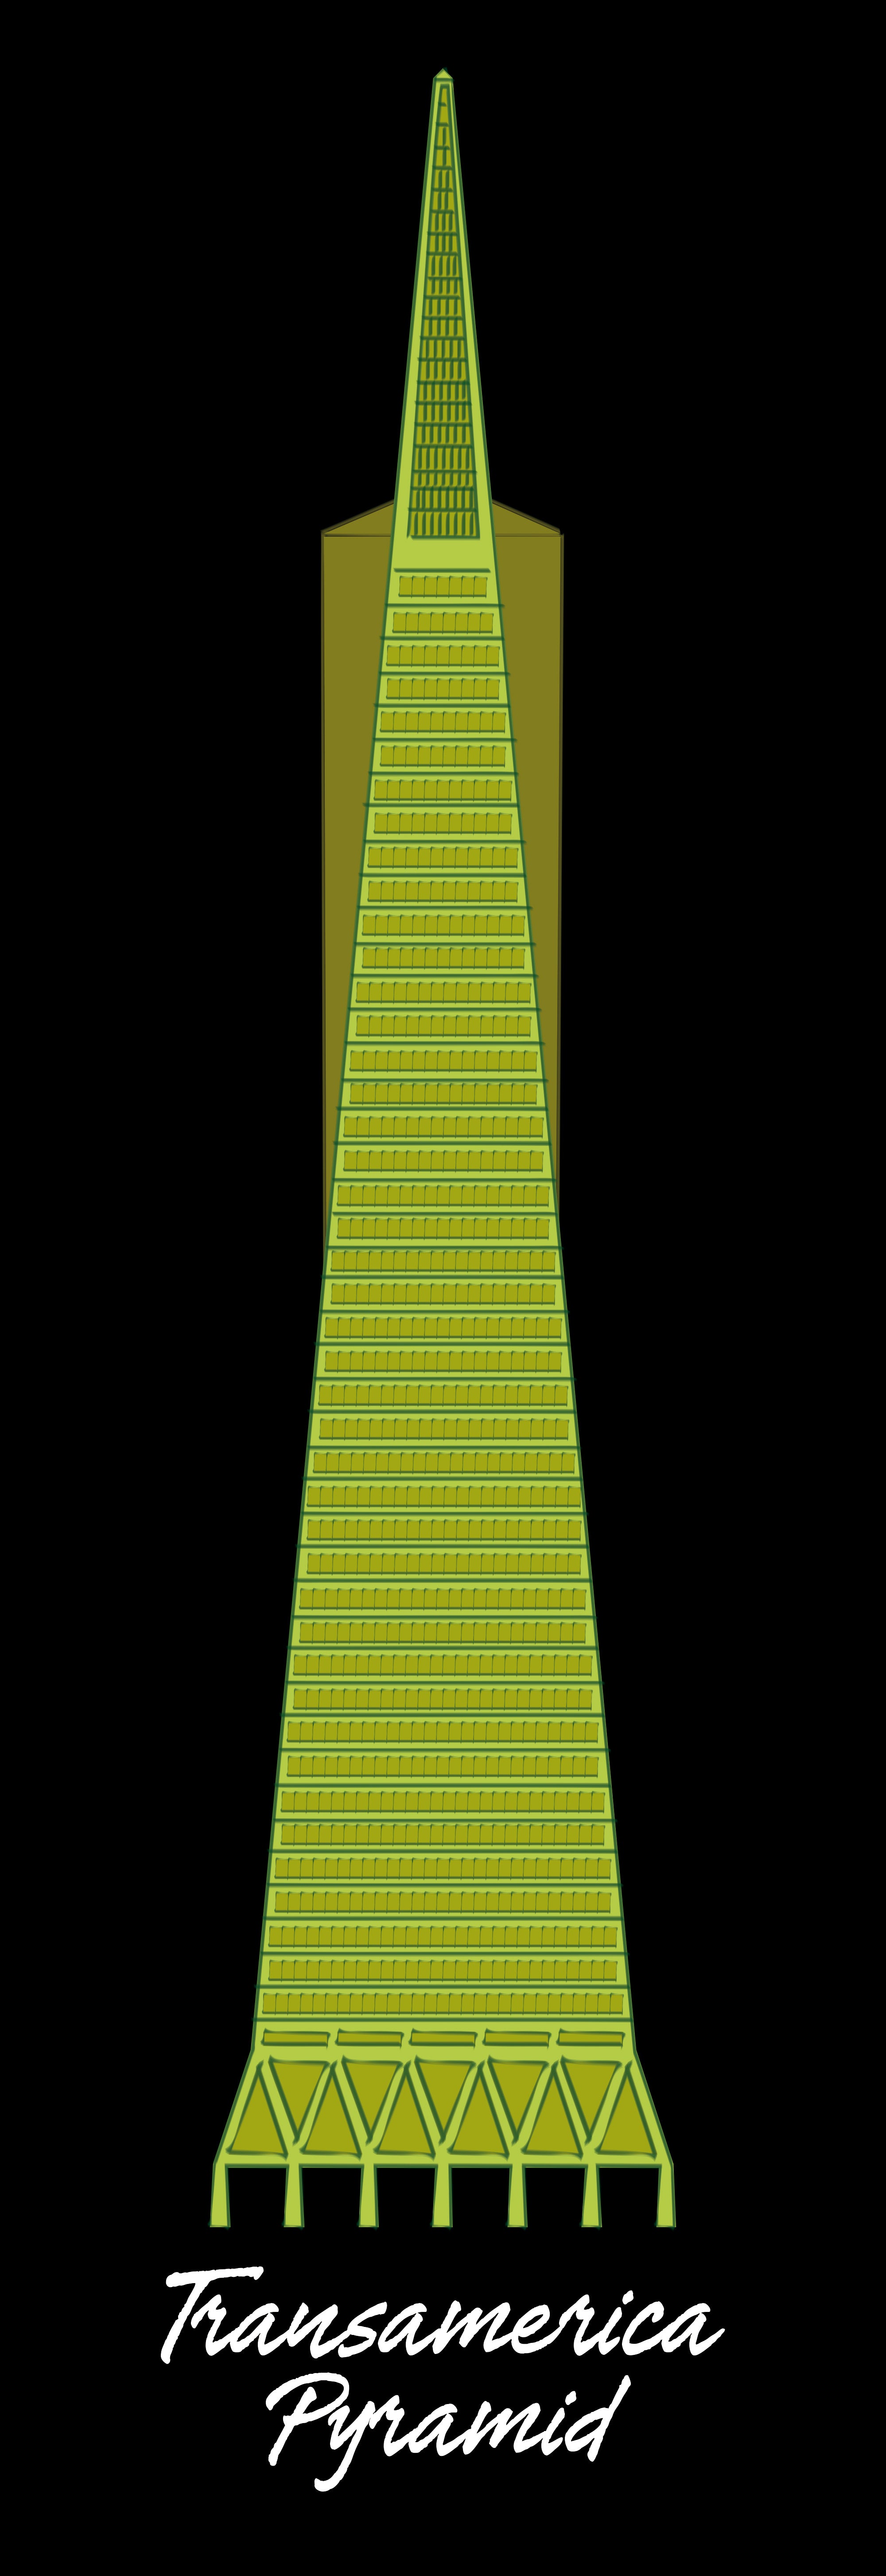 Transamerica Pyramid Grafik